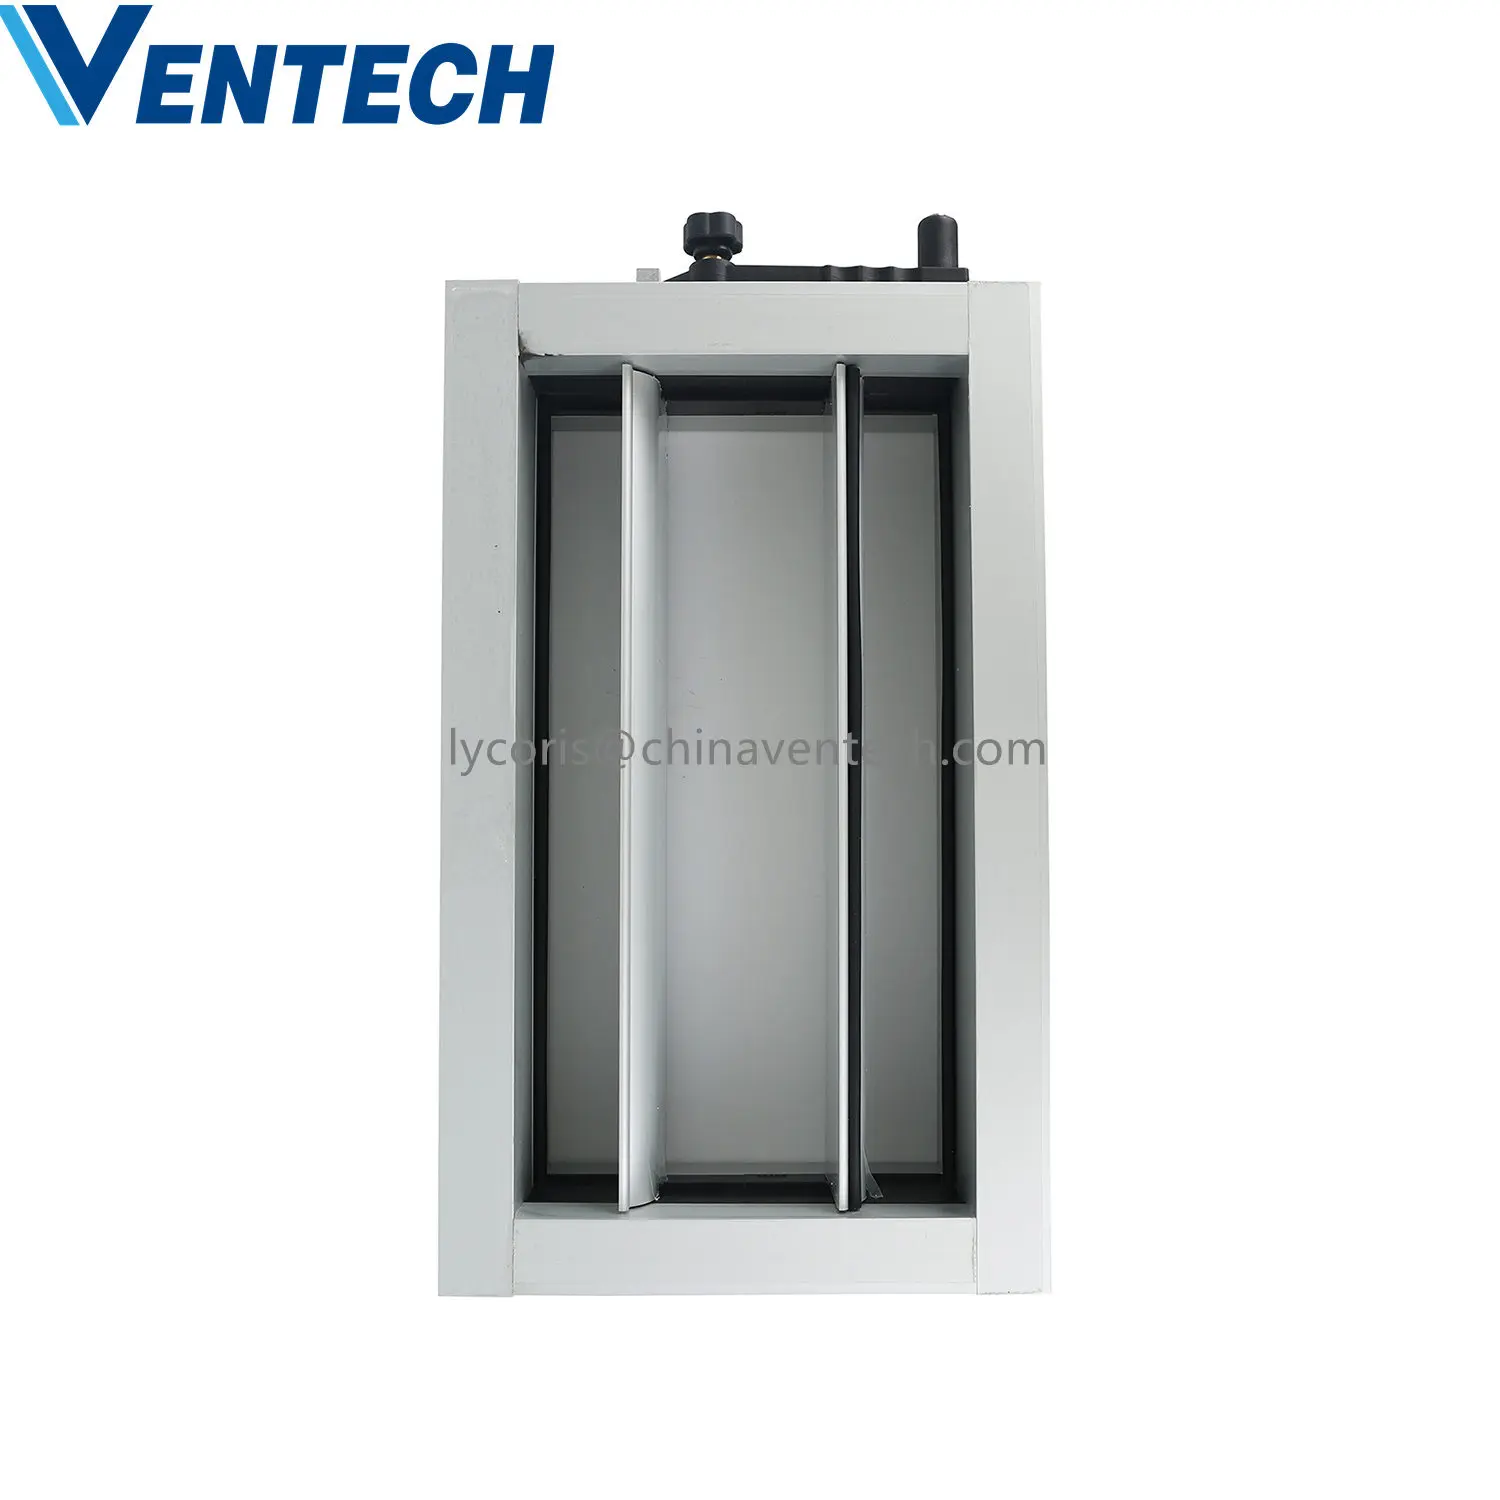 VCD Damper Ventilation Manual Volume Control Aluminum Air Damper Supply Air Ceiling Diffuser HVAC system Air Duct